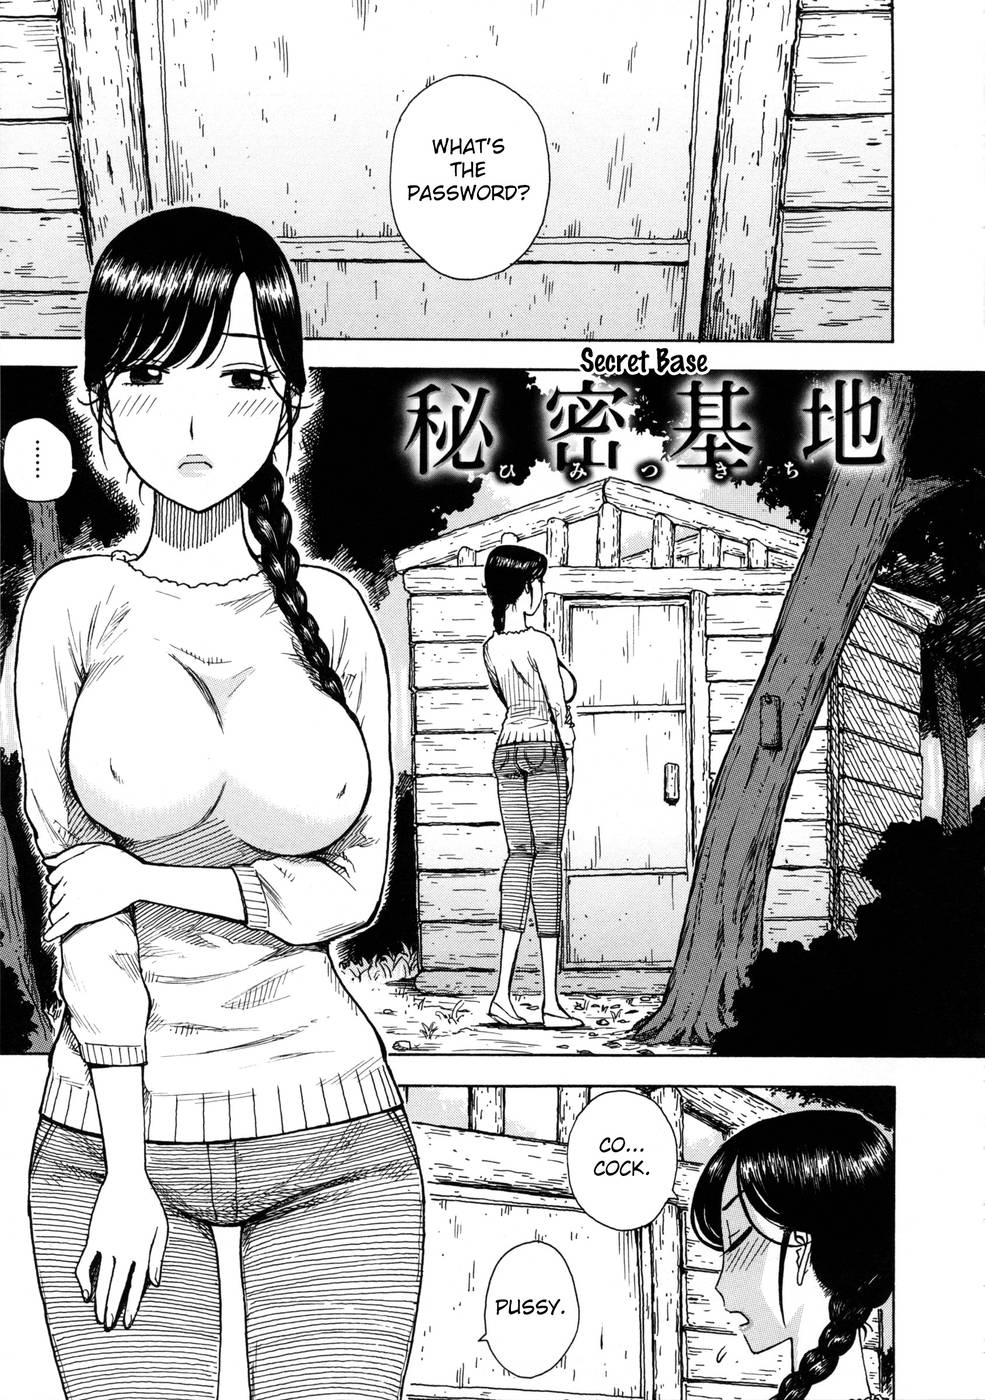 Komik Ngentot Ibu Hamil - Hitozuma-Chapter 11-Serect Base-Hentai Manga Hentai Comic - Online porn  video at mobile